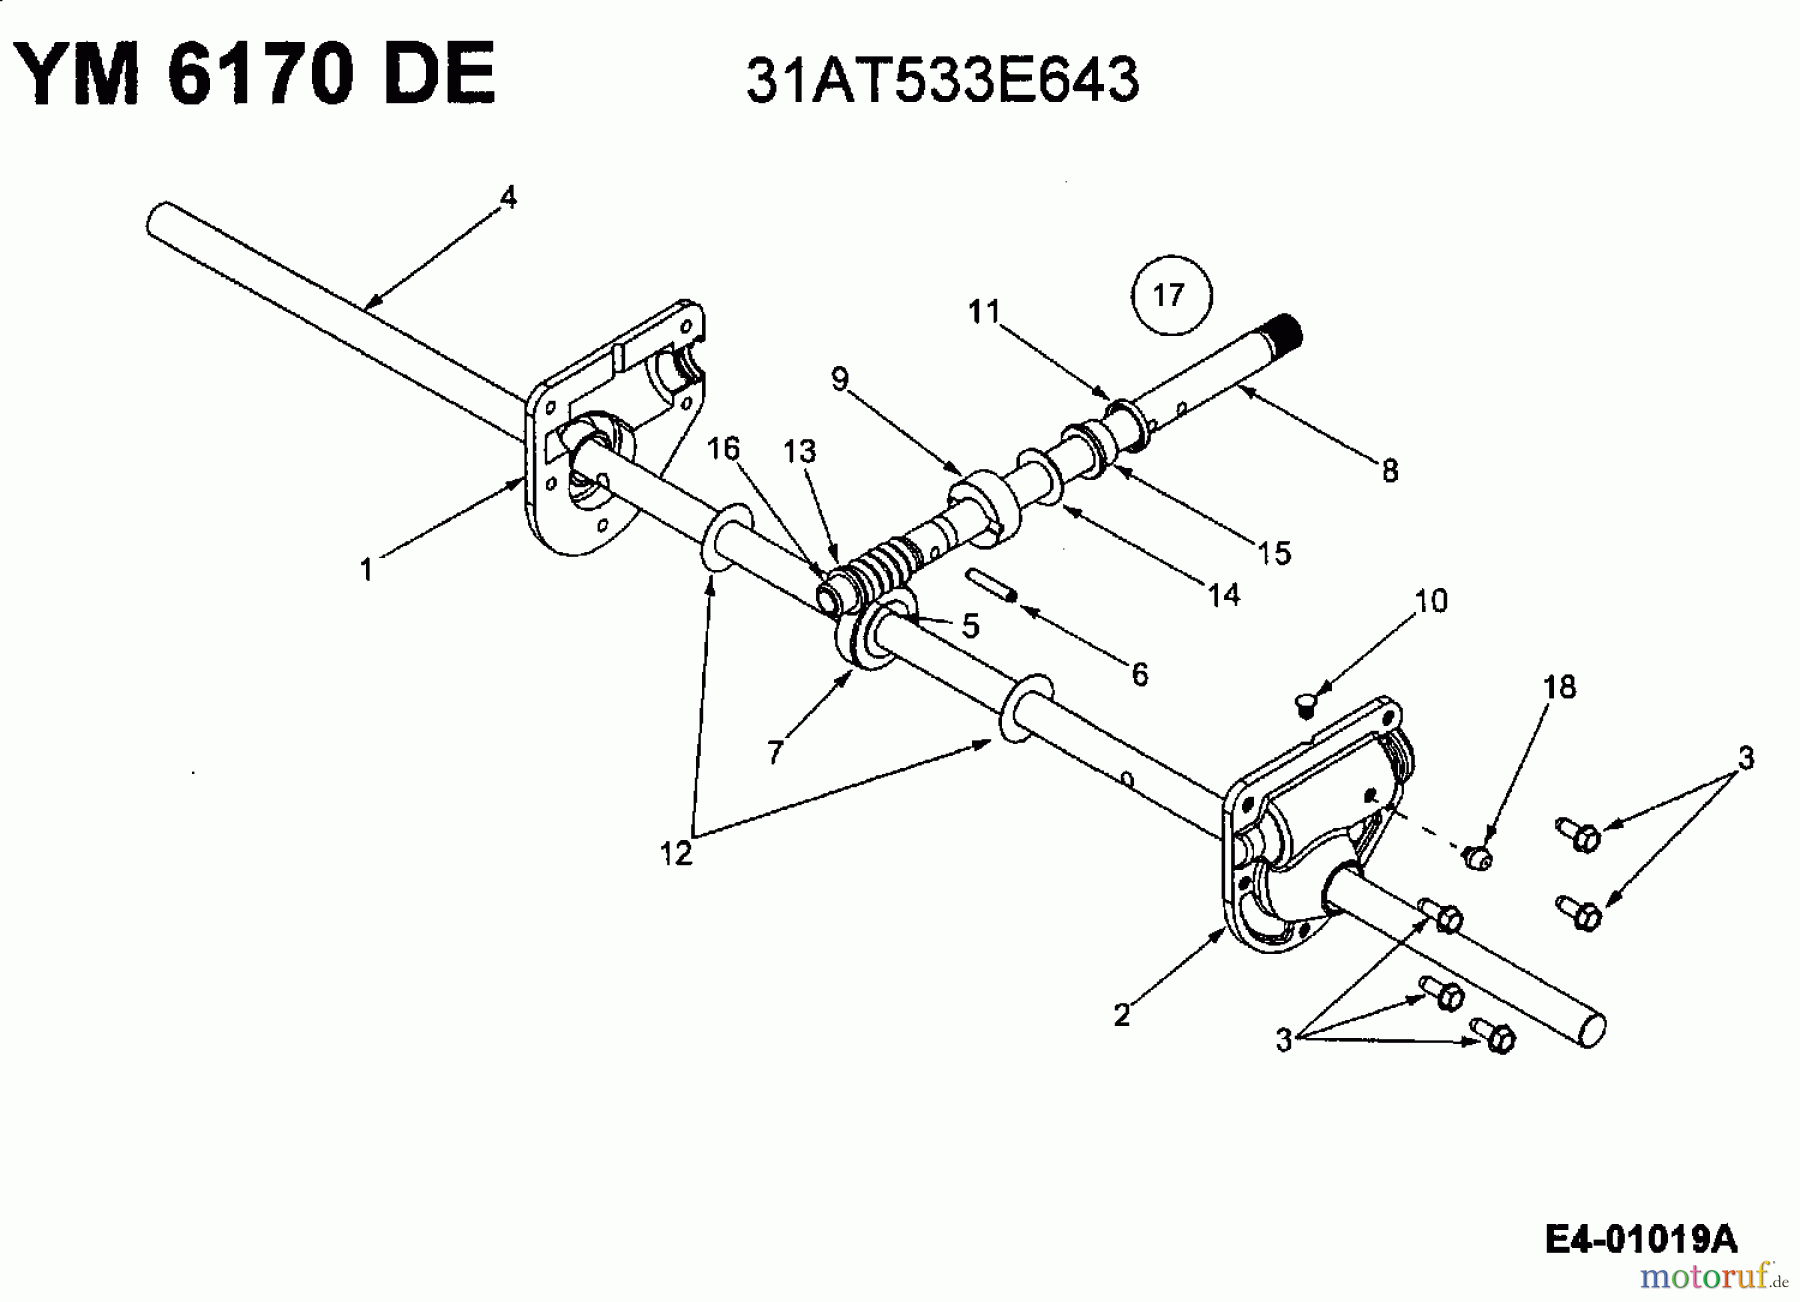  Yard-Man Snow throwers E 533 E 31AE533E643  (2001) Auger gearbox